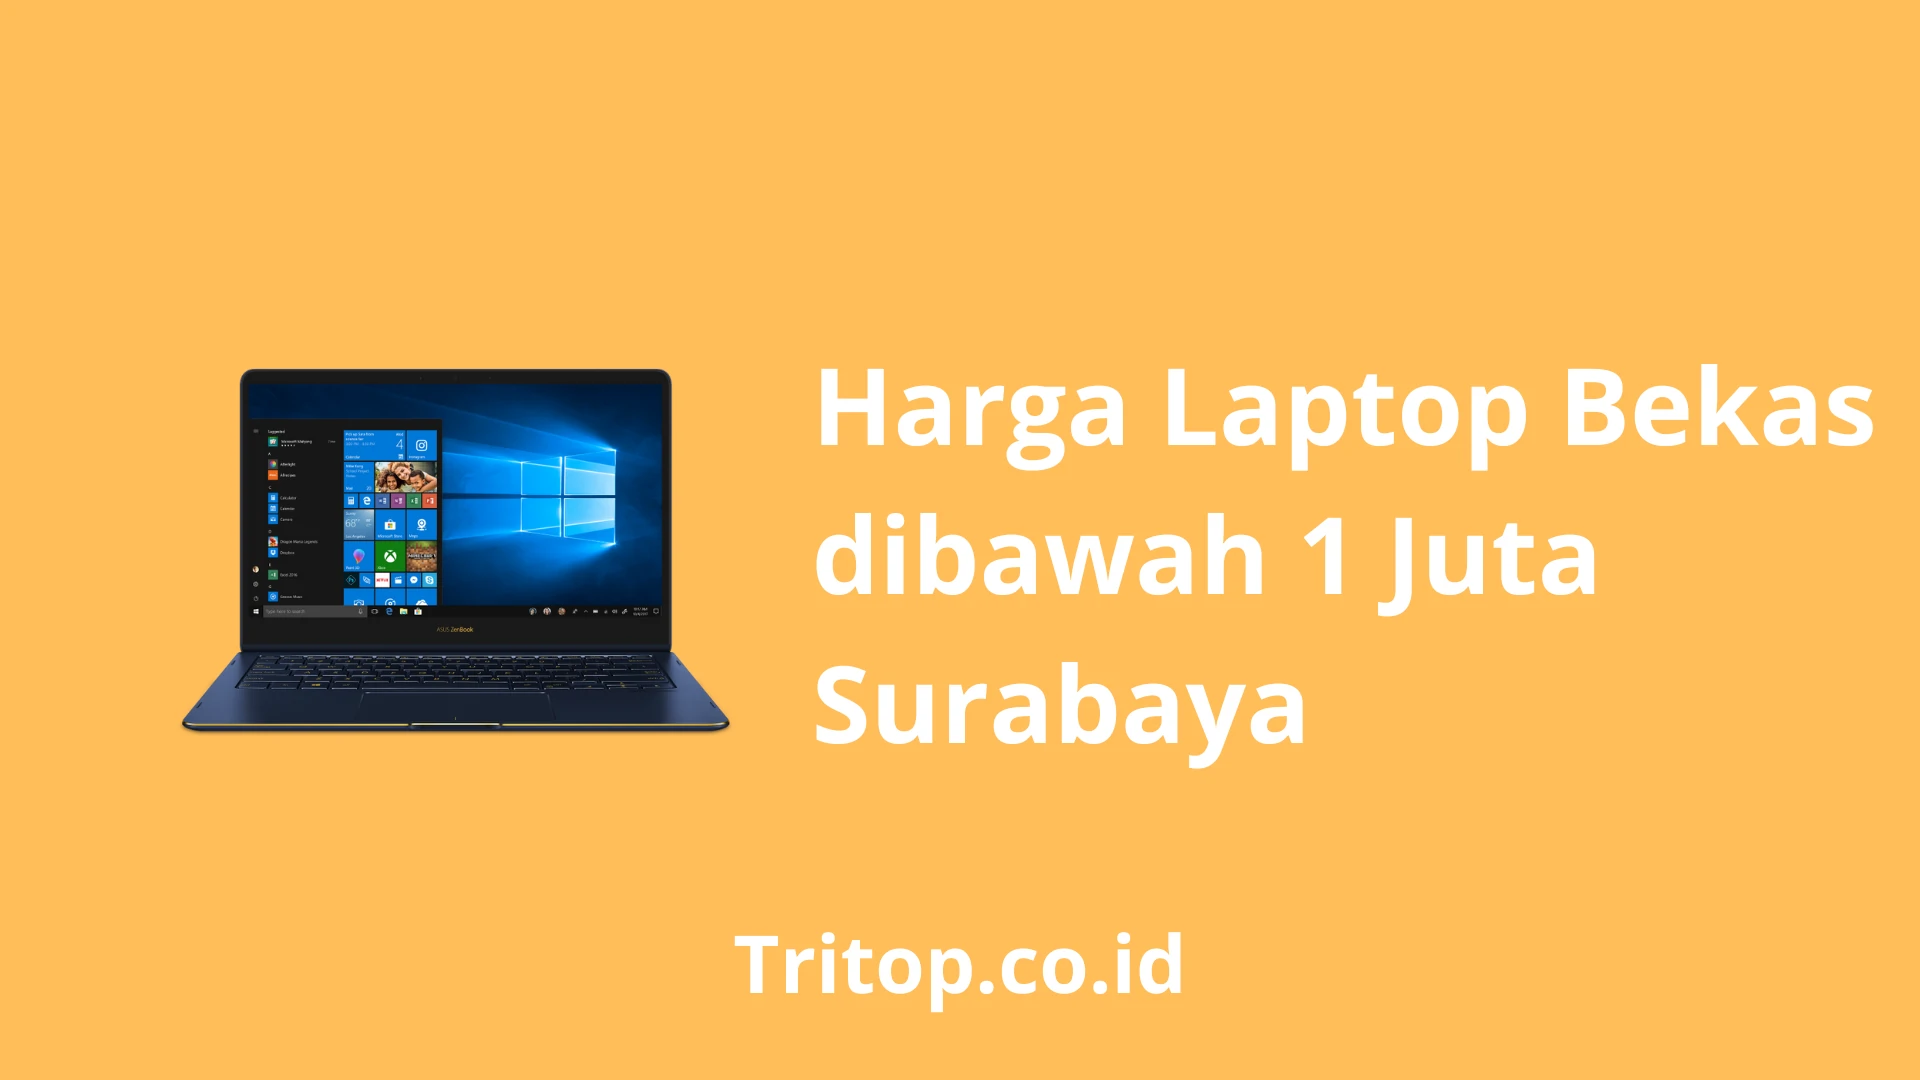 Harga Laptop Bekas dibawah 1 Juta Surabaya Tritop.co.id